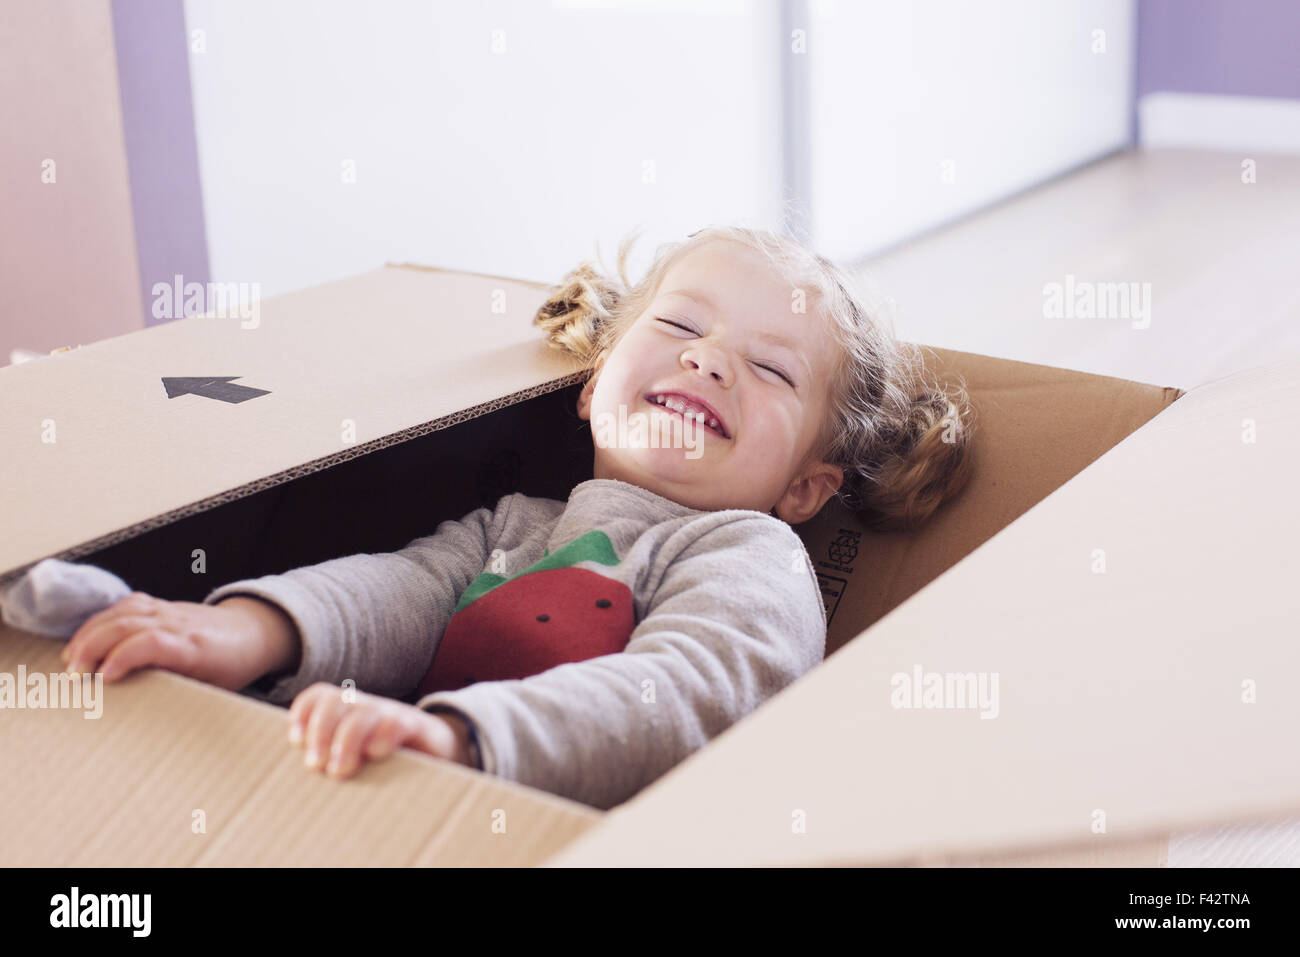 Little girl playing in cardboard box, portrait Stock Photo